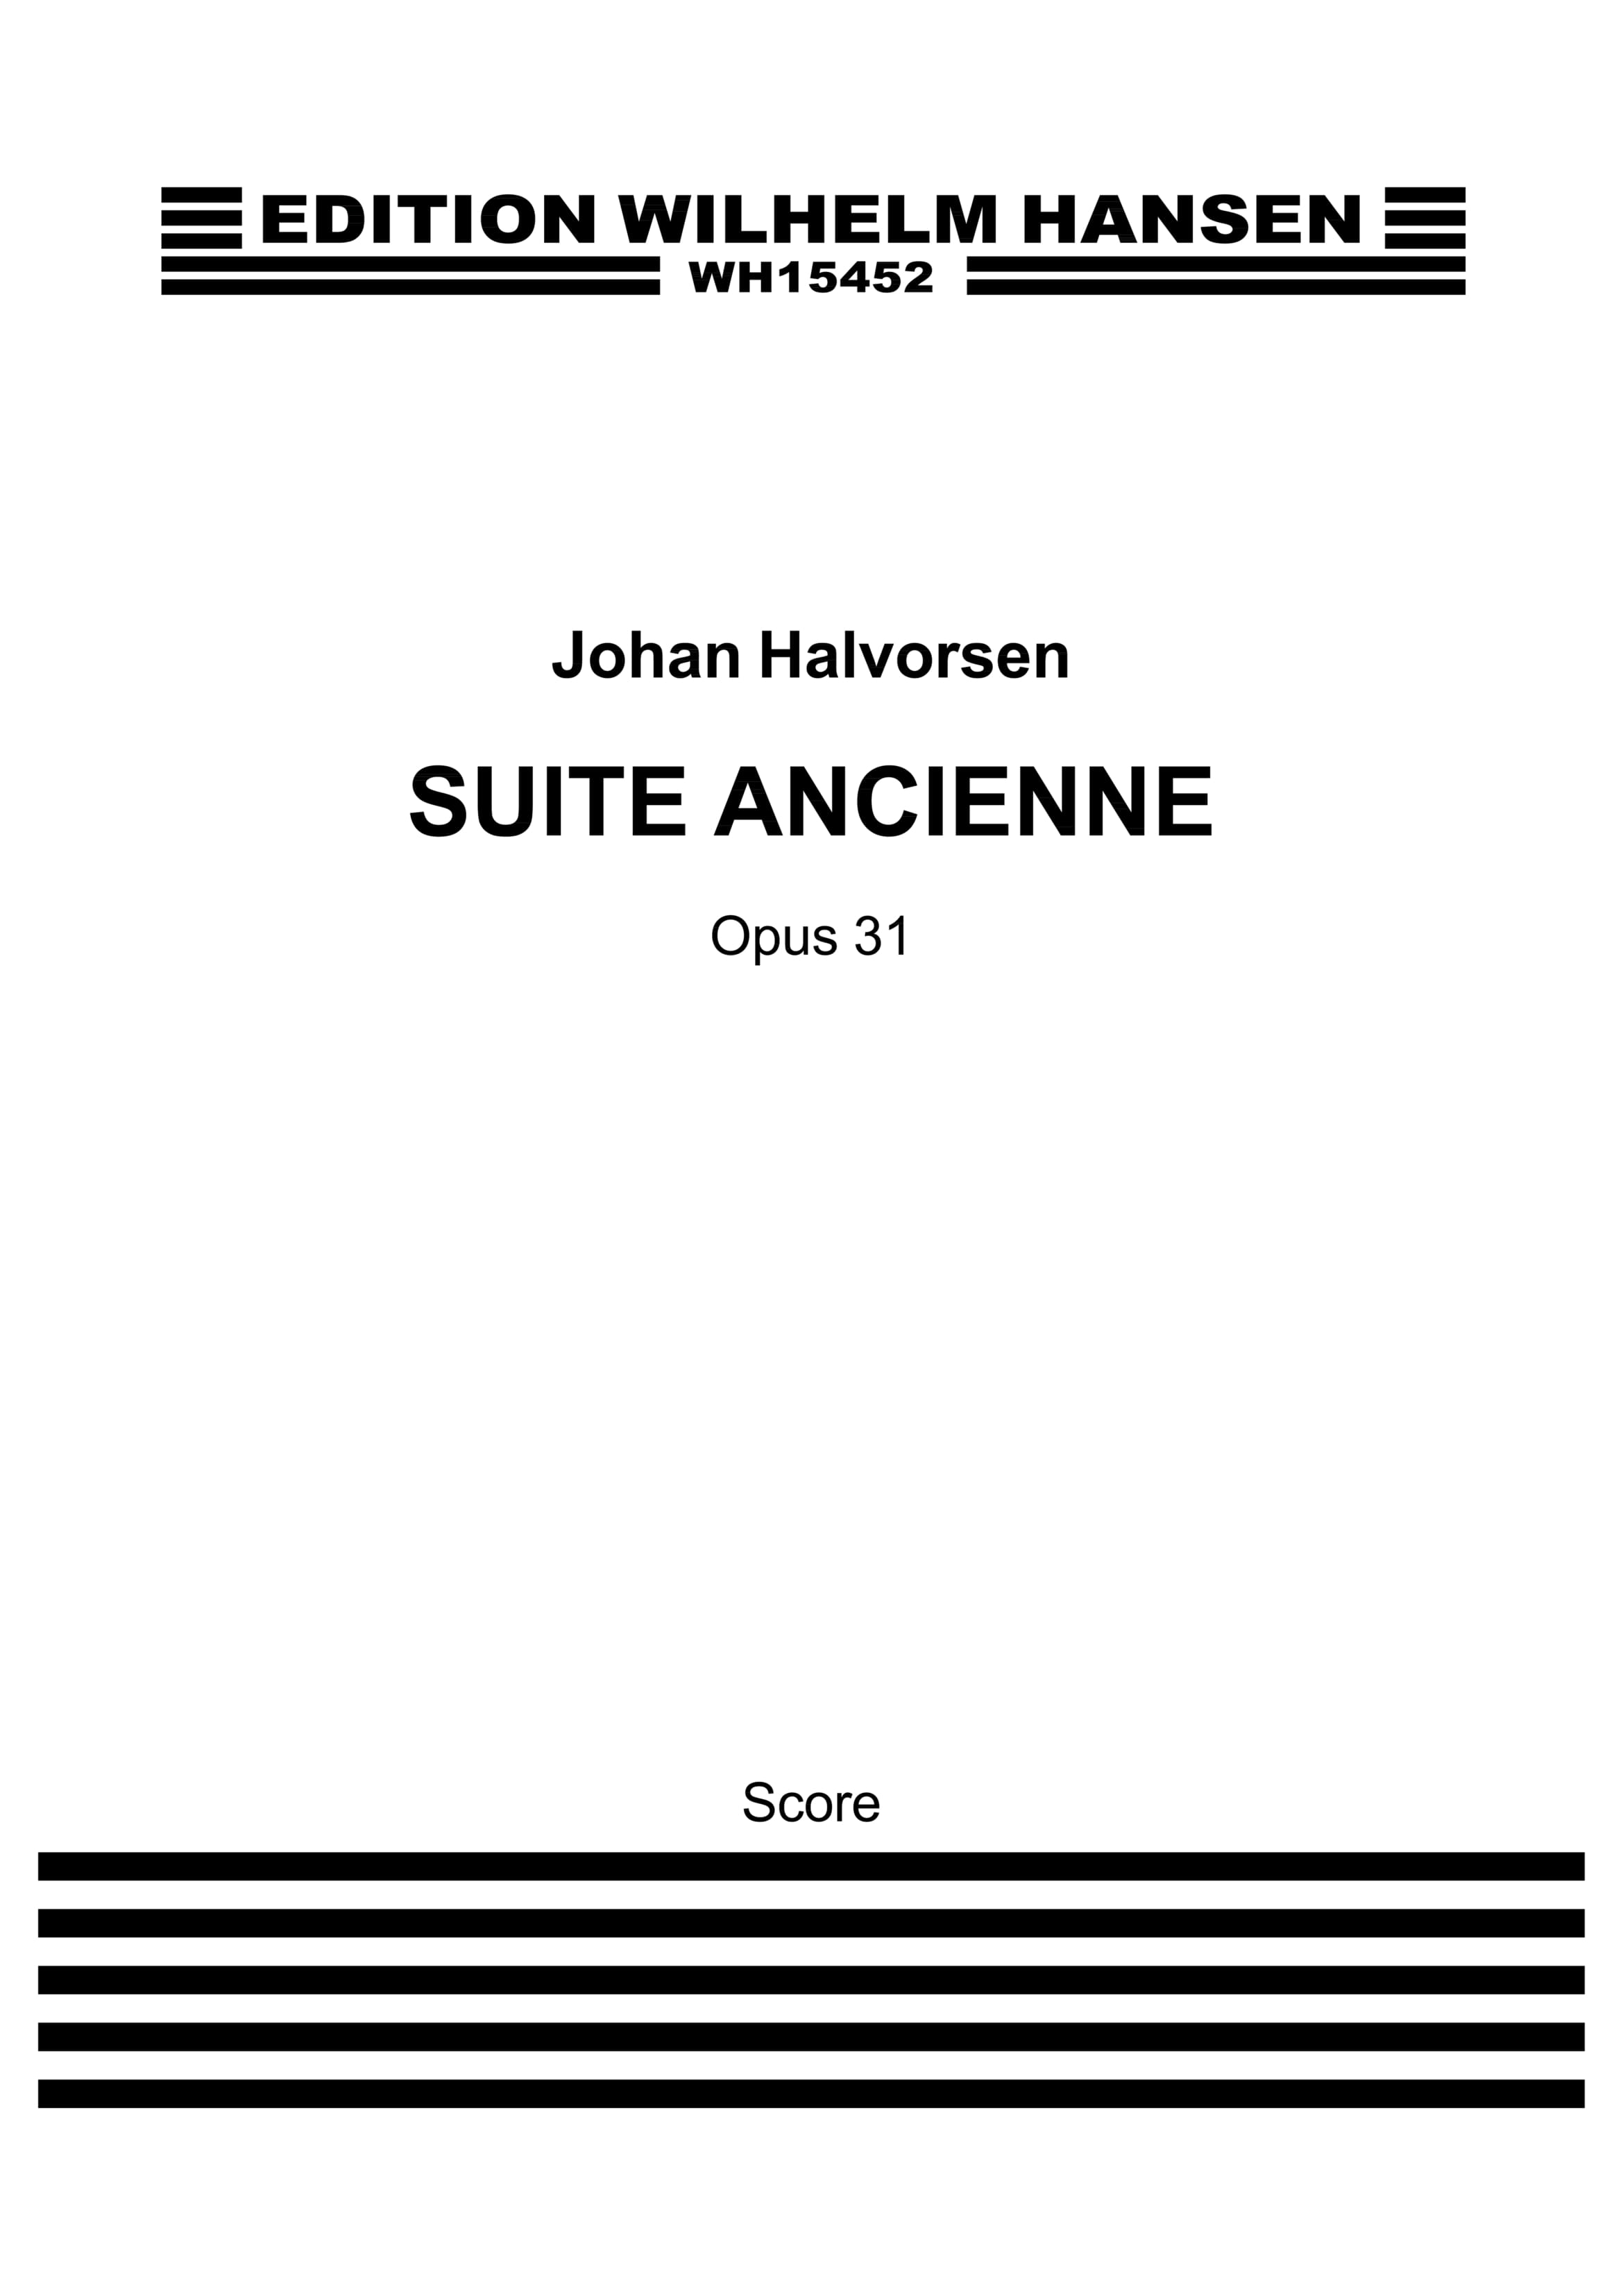 Johan Halvorsen: Suite Ancienne Op. 31: Orchestra: Score